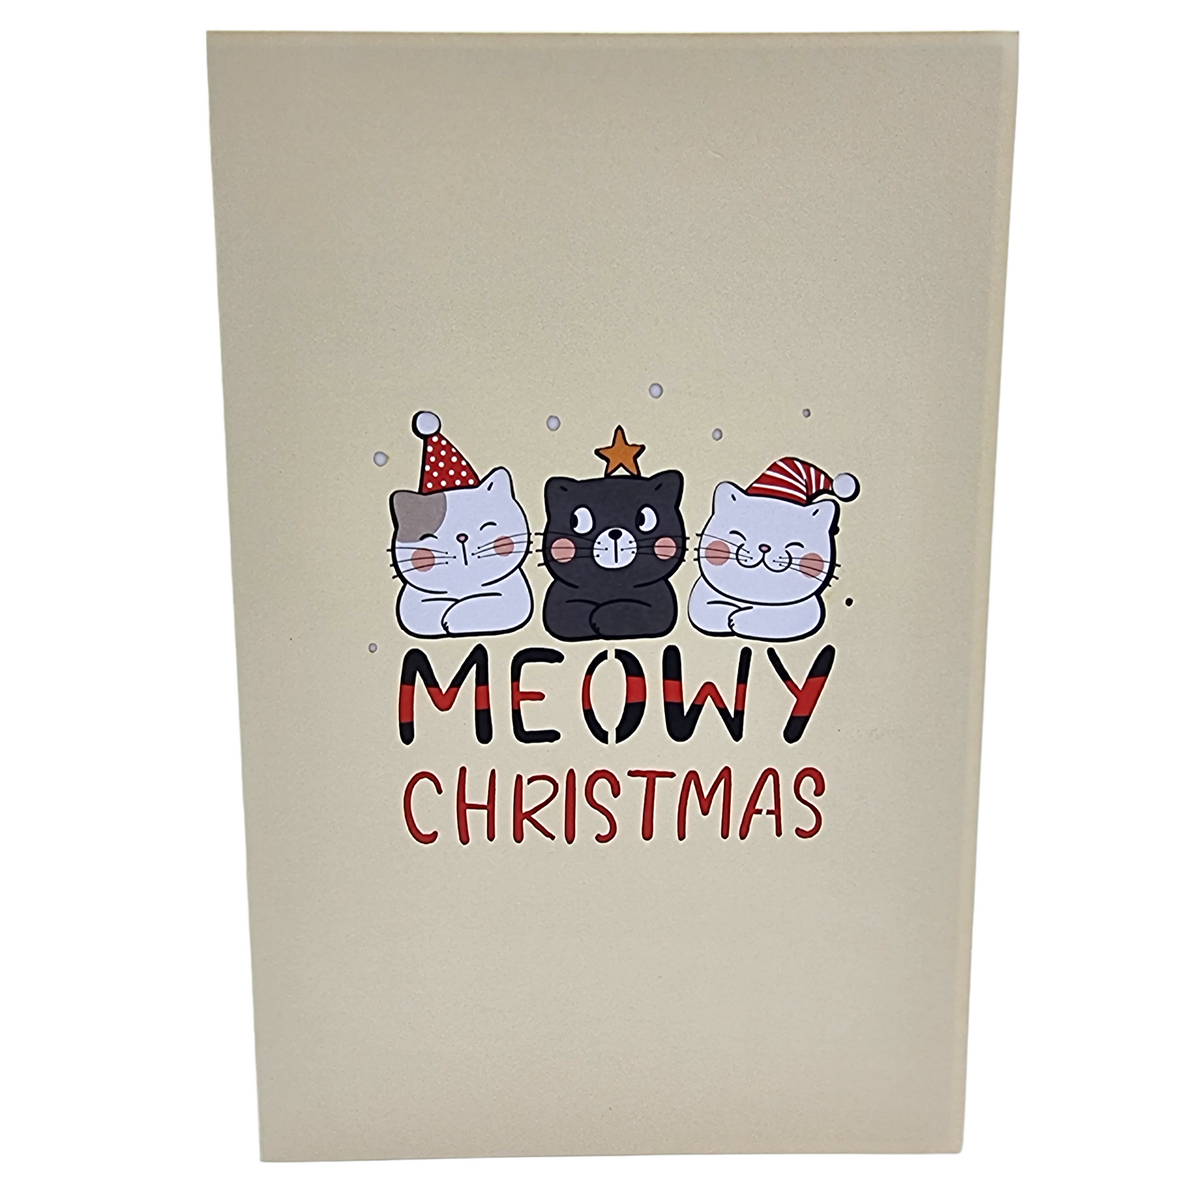 Meowy Christmas Pop Up Card